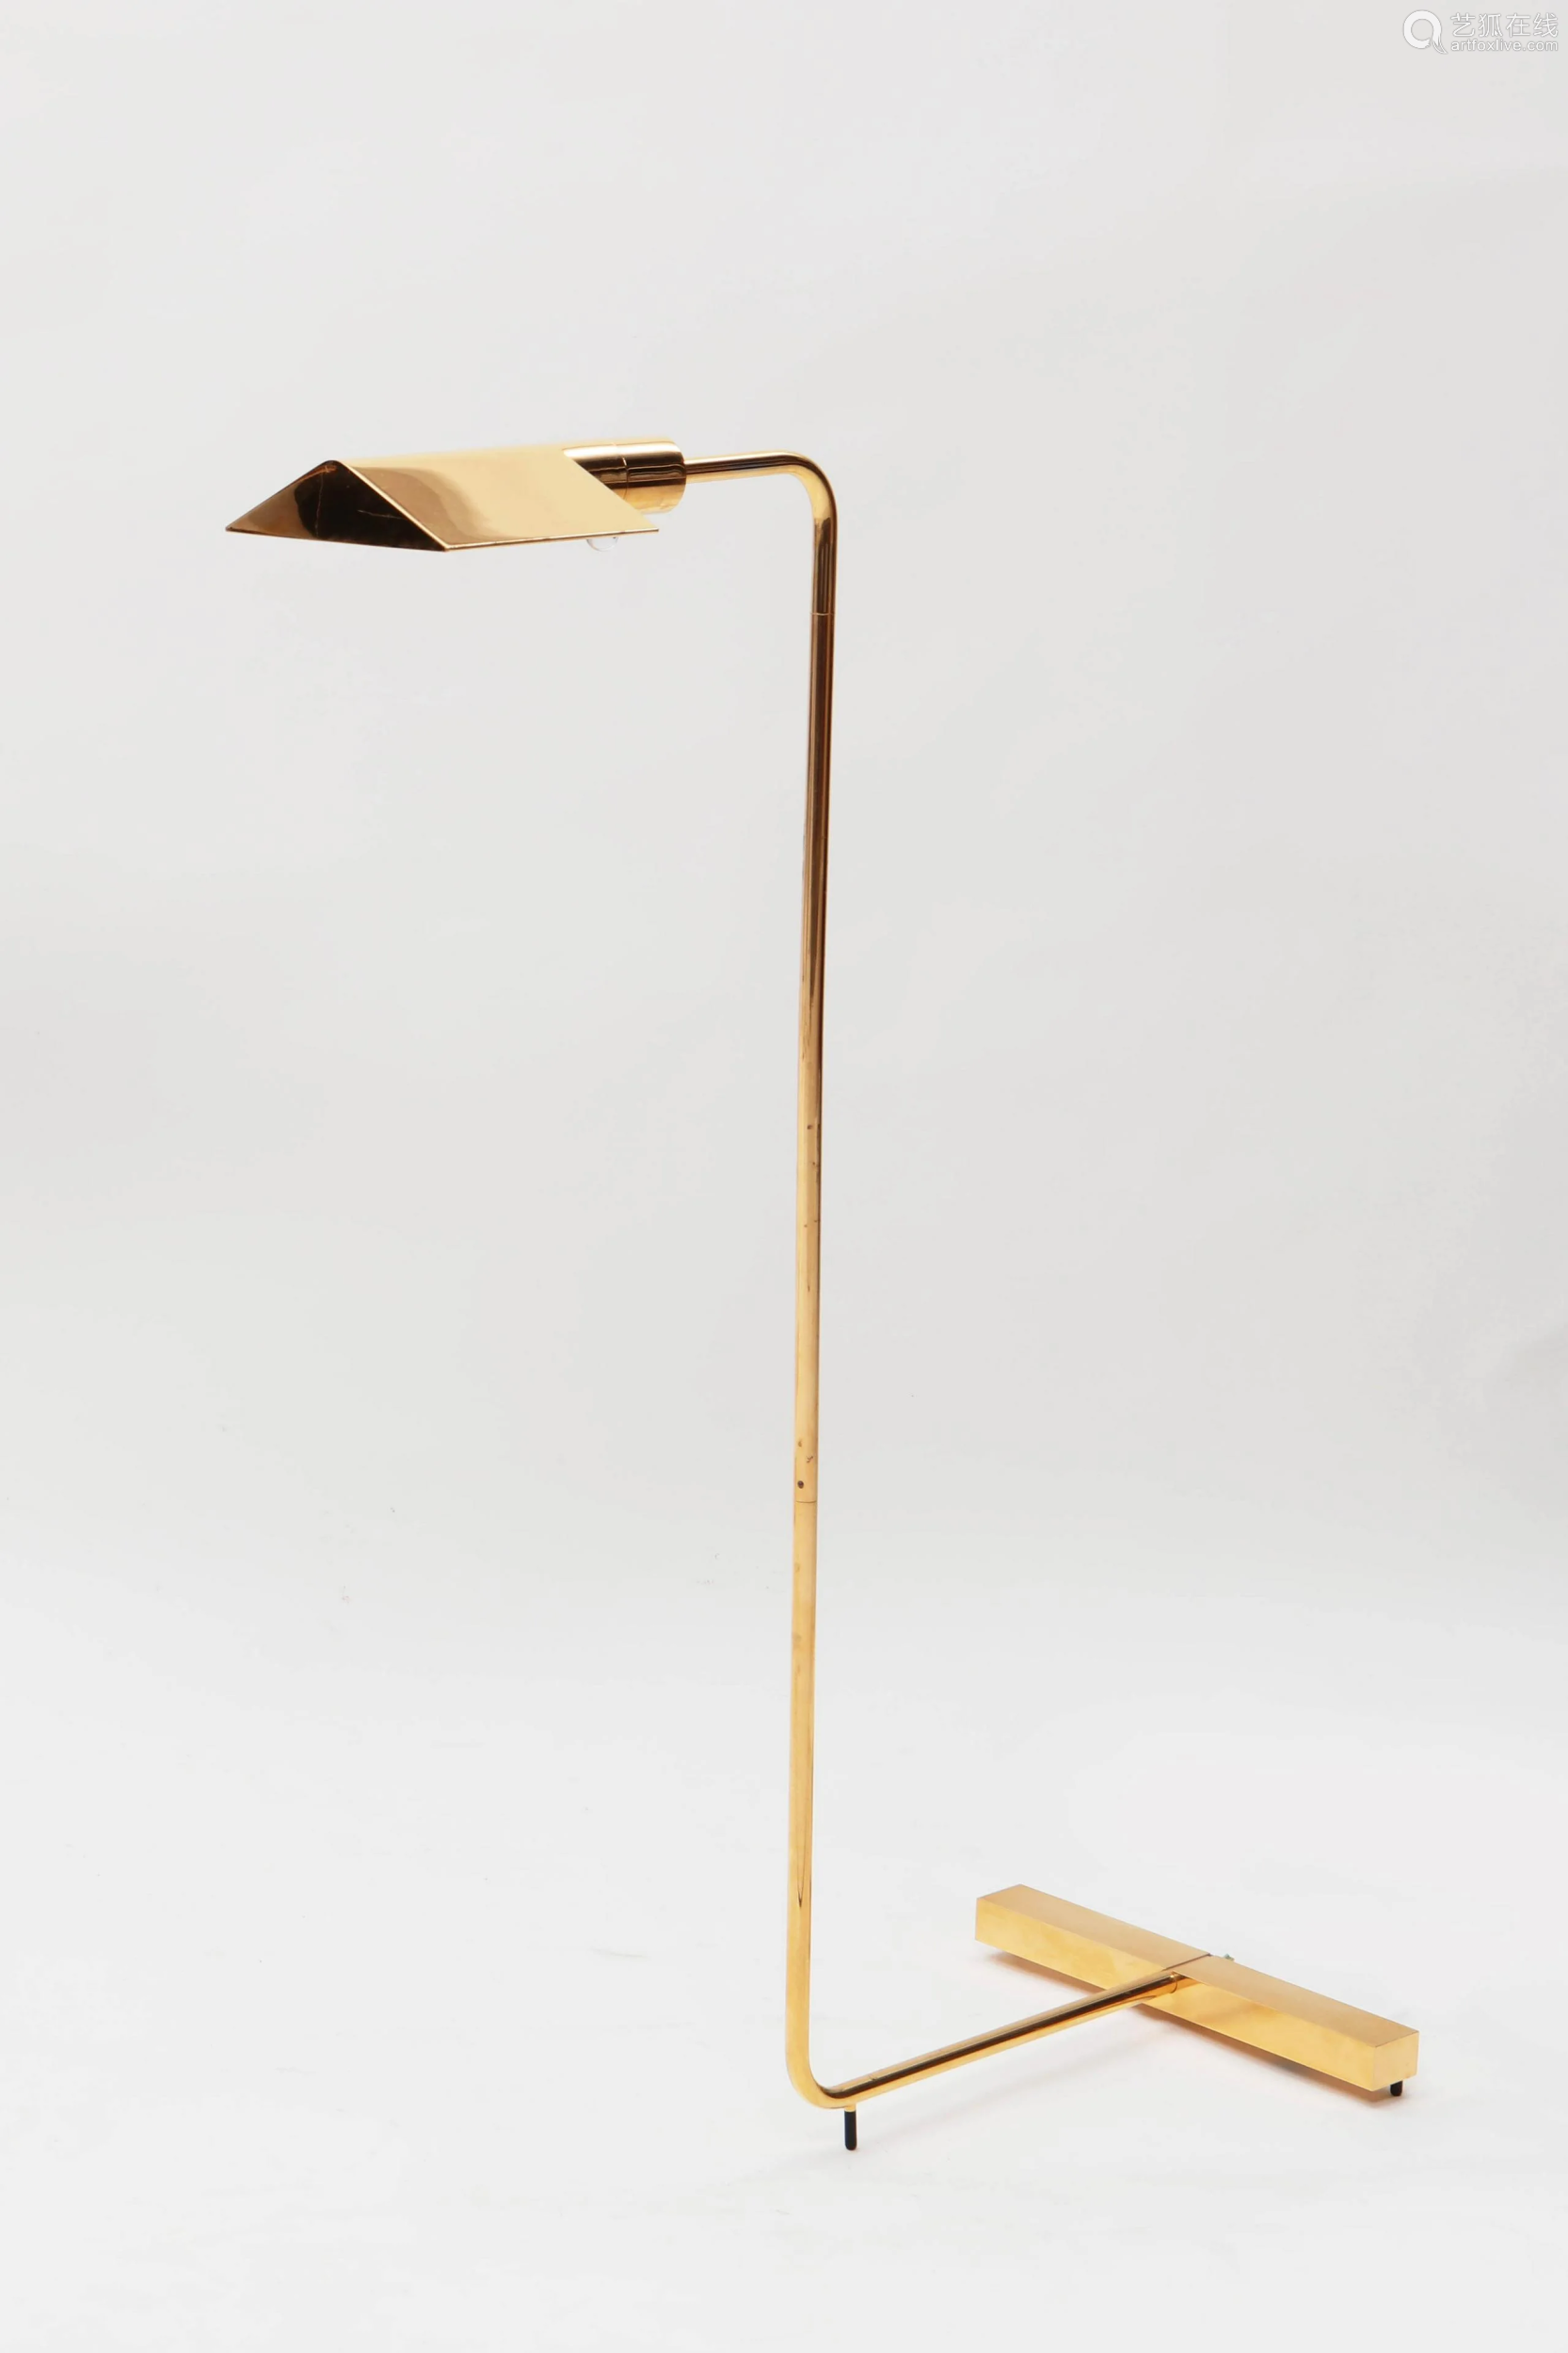 A Cedric Hartman Brass And Steel Floor, Cedric Hartman Table Lamp